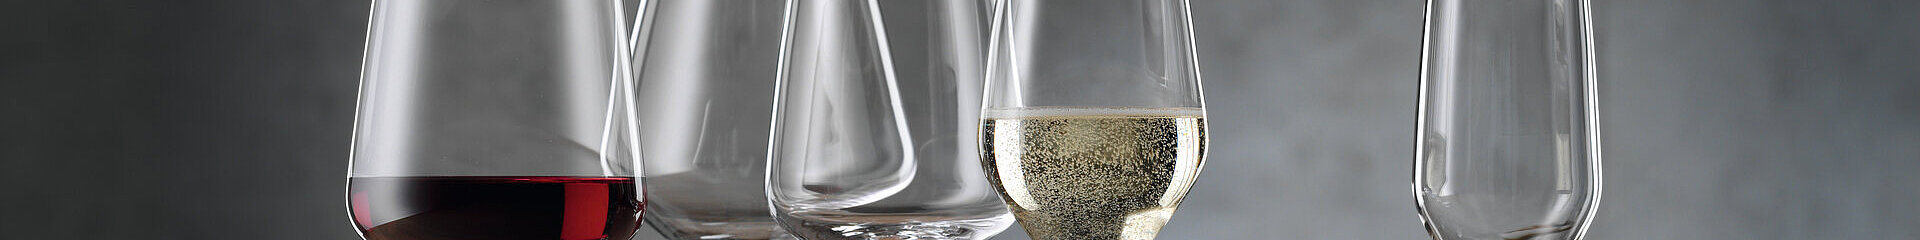 Čaša za belo vino, Style - Spiegelau